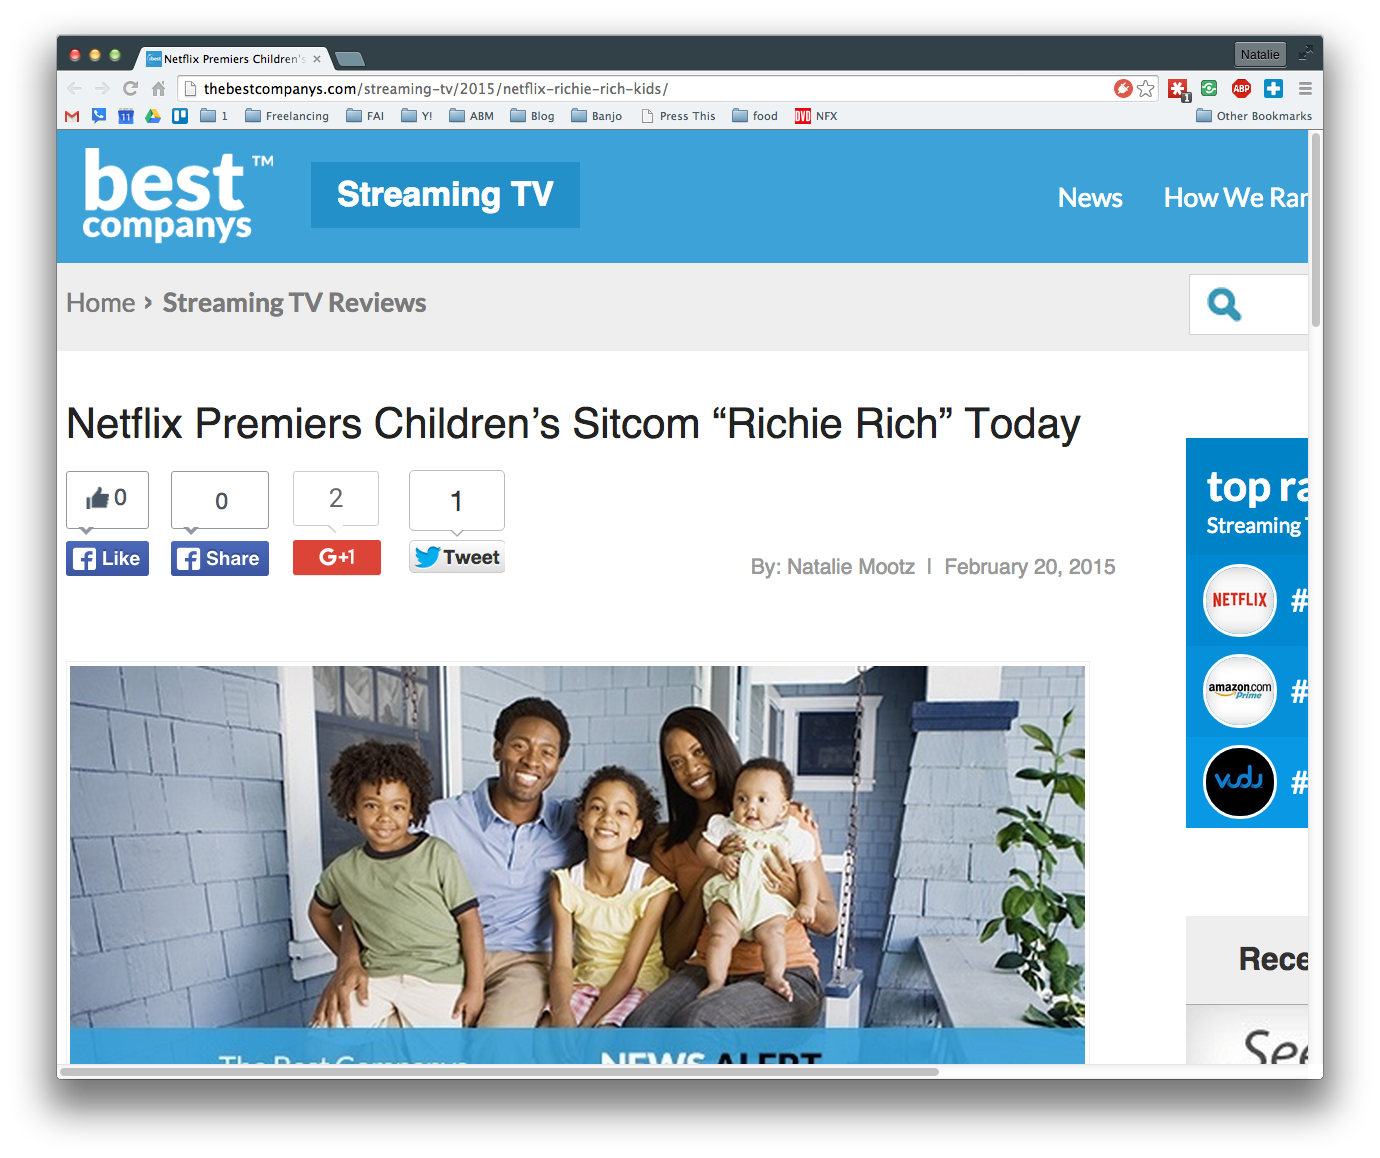 Netflix Premiers Children’s Sitcom Richie Rich Today